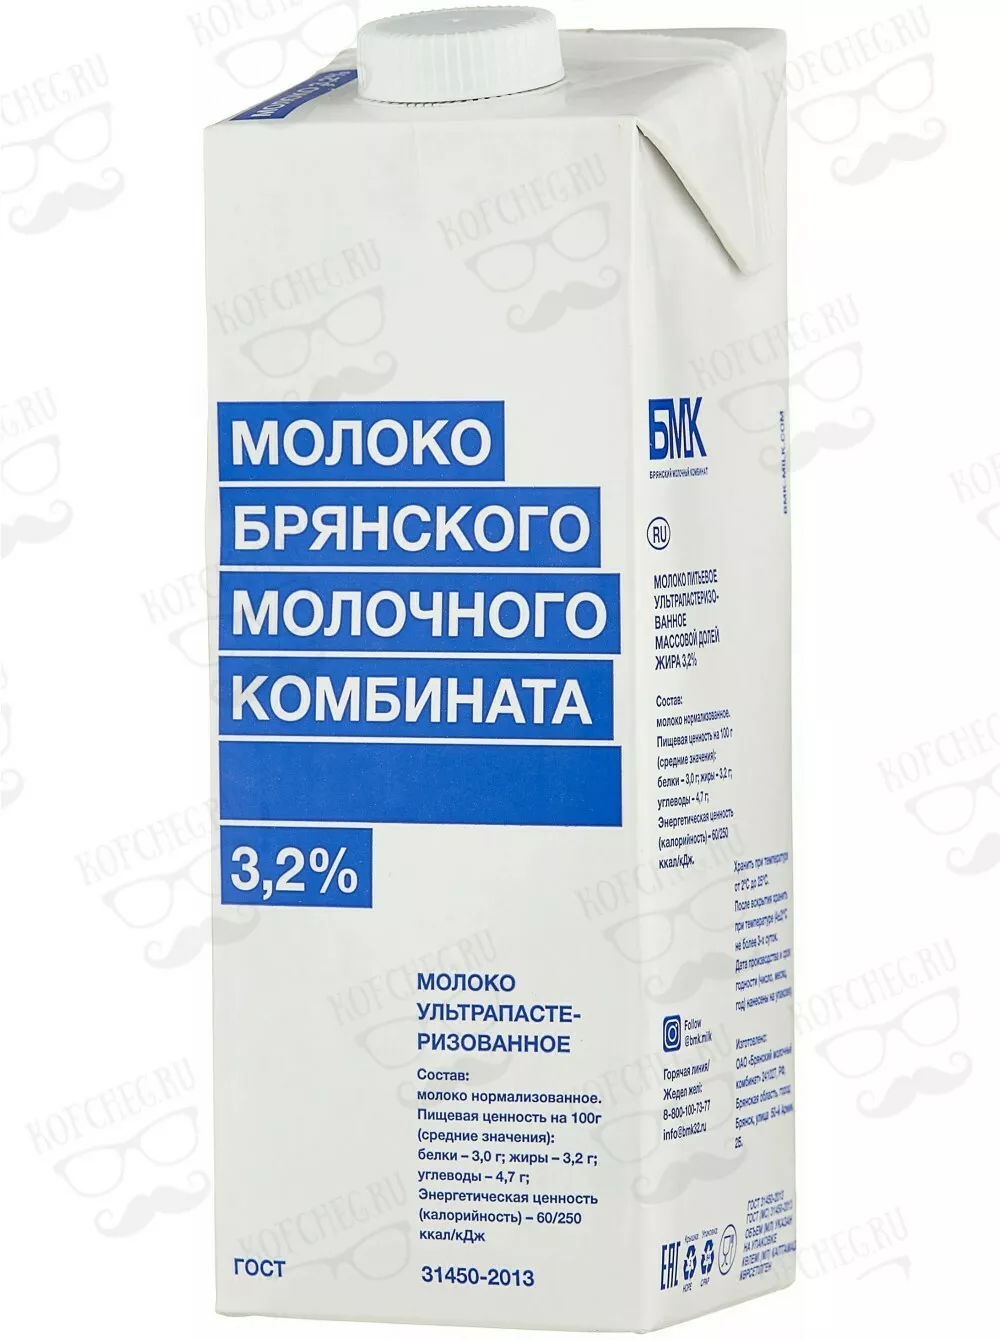 фотография продукта Молоко бмк 3,2% жирности 1л ГОСТ